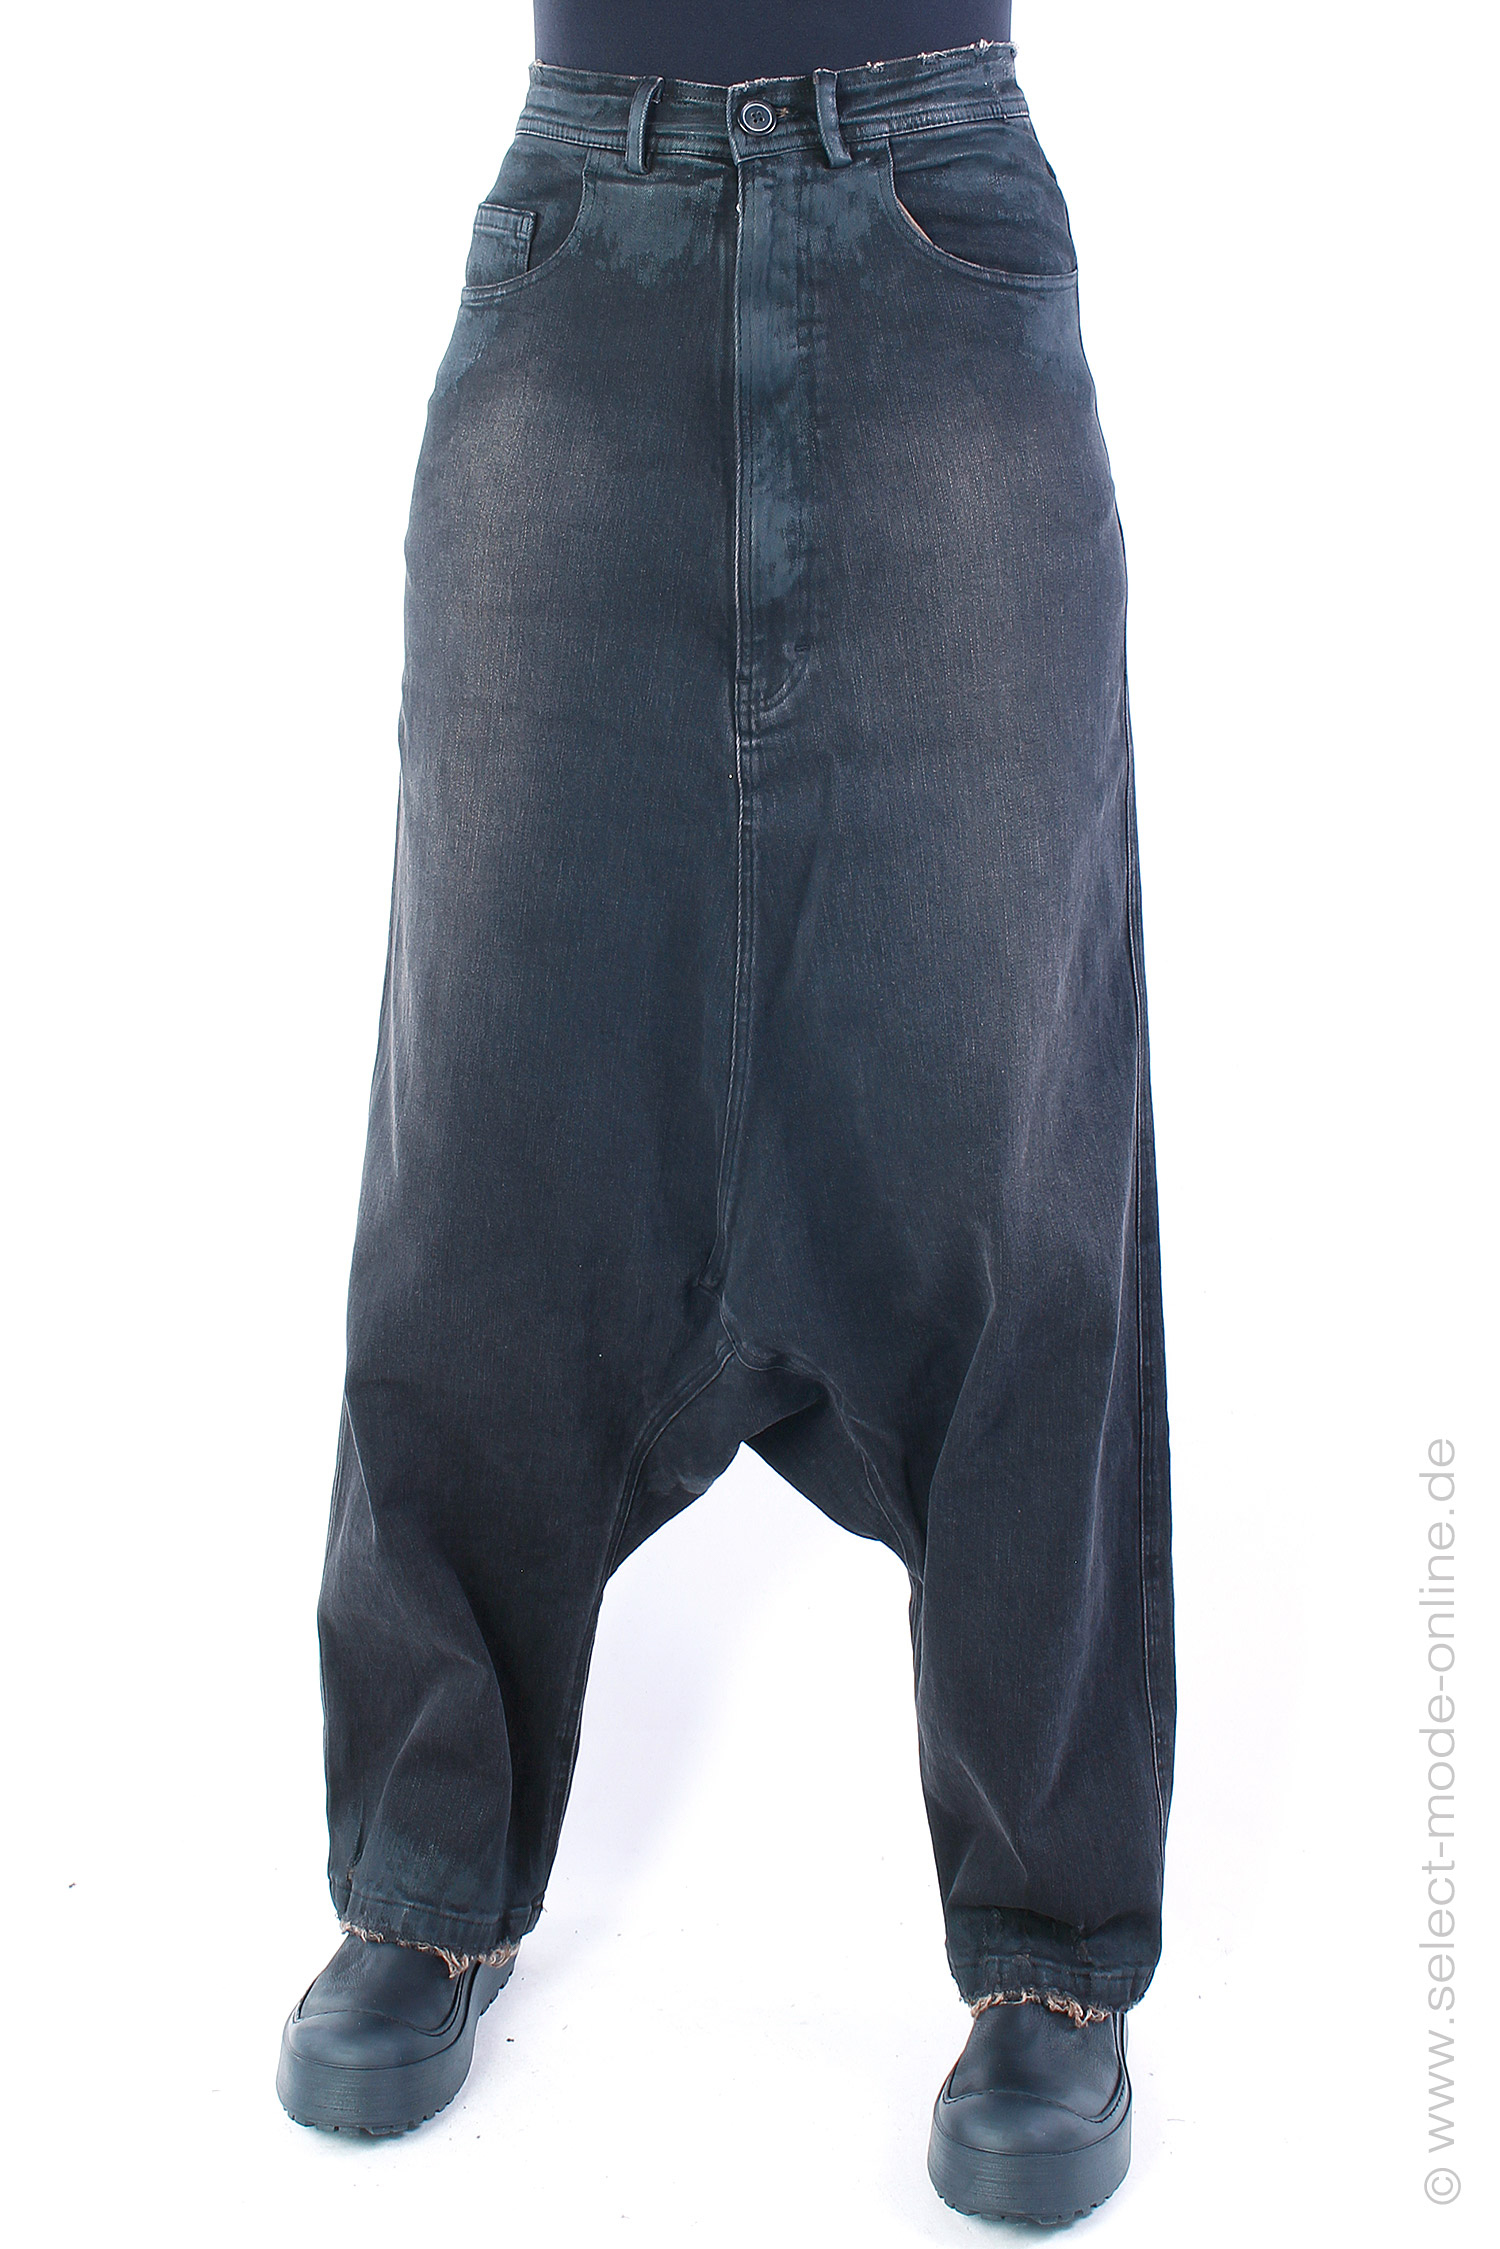 Jeanshose - black jeans - 2231030103